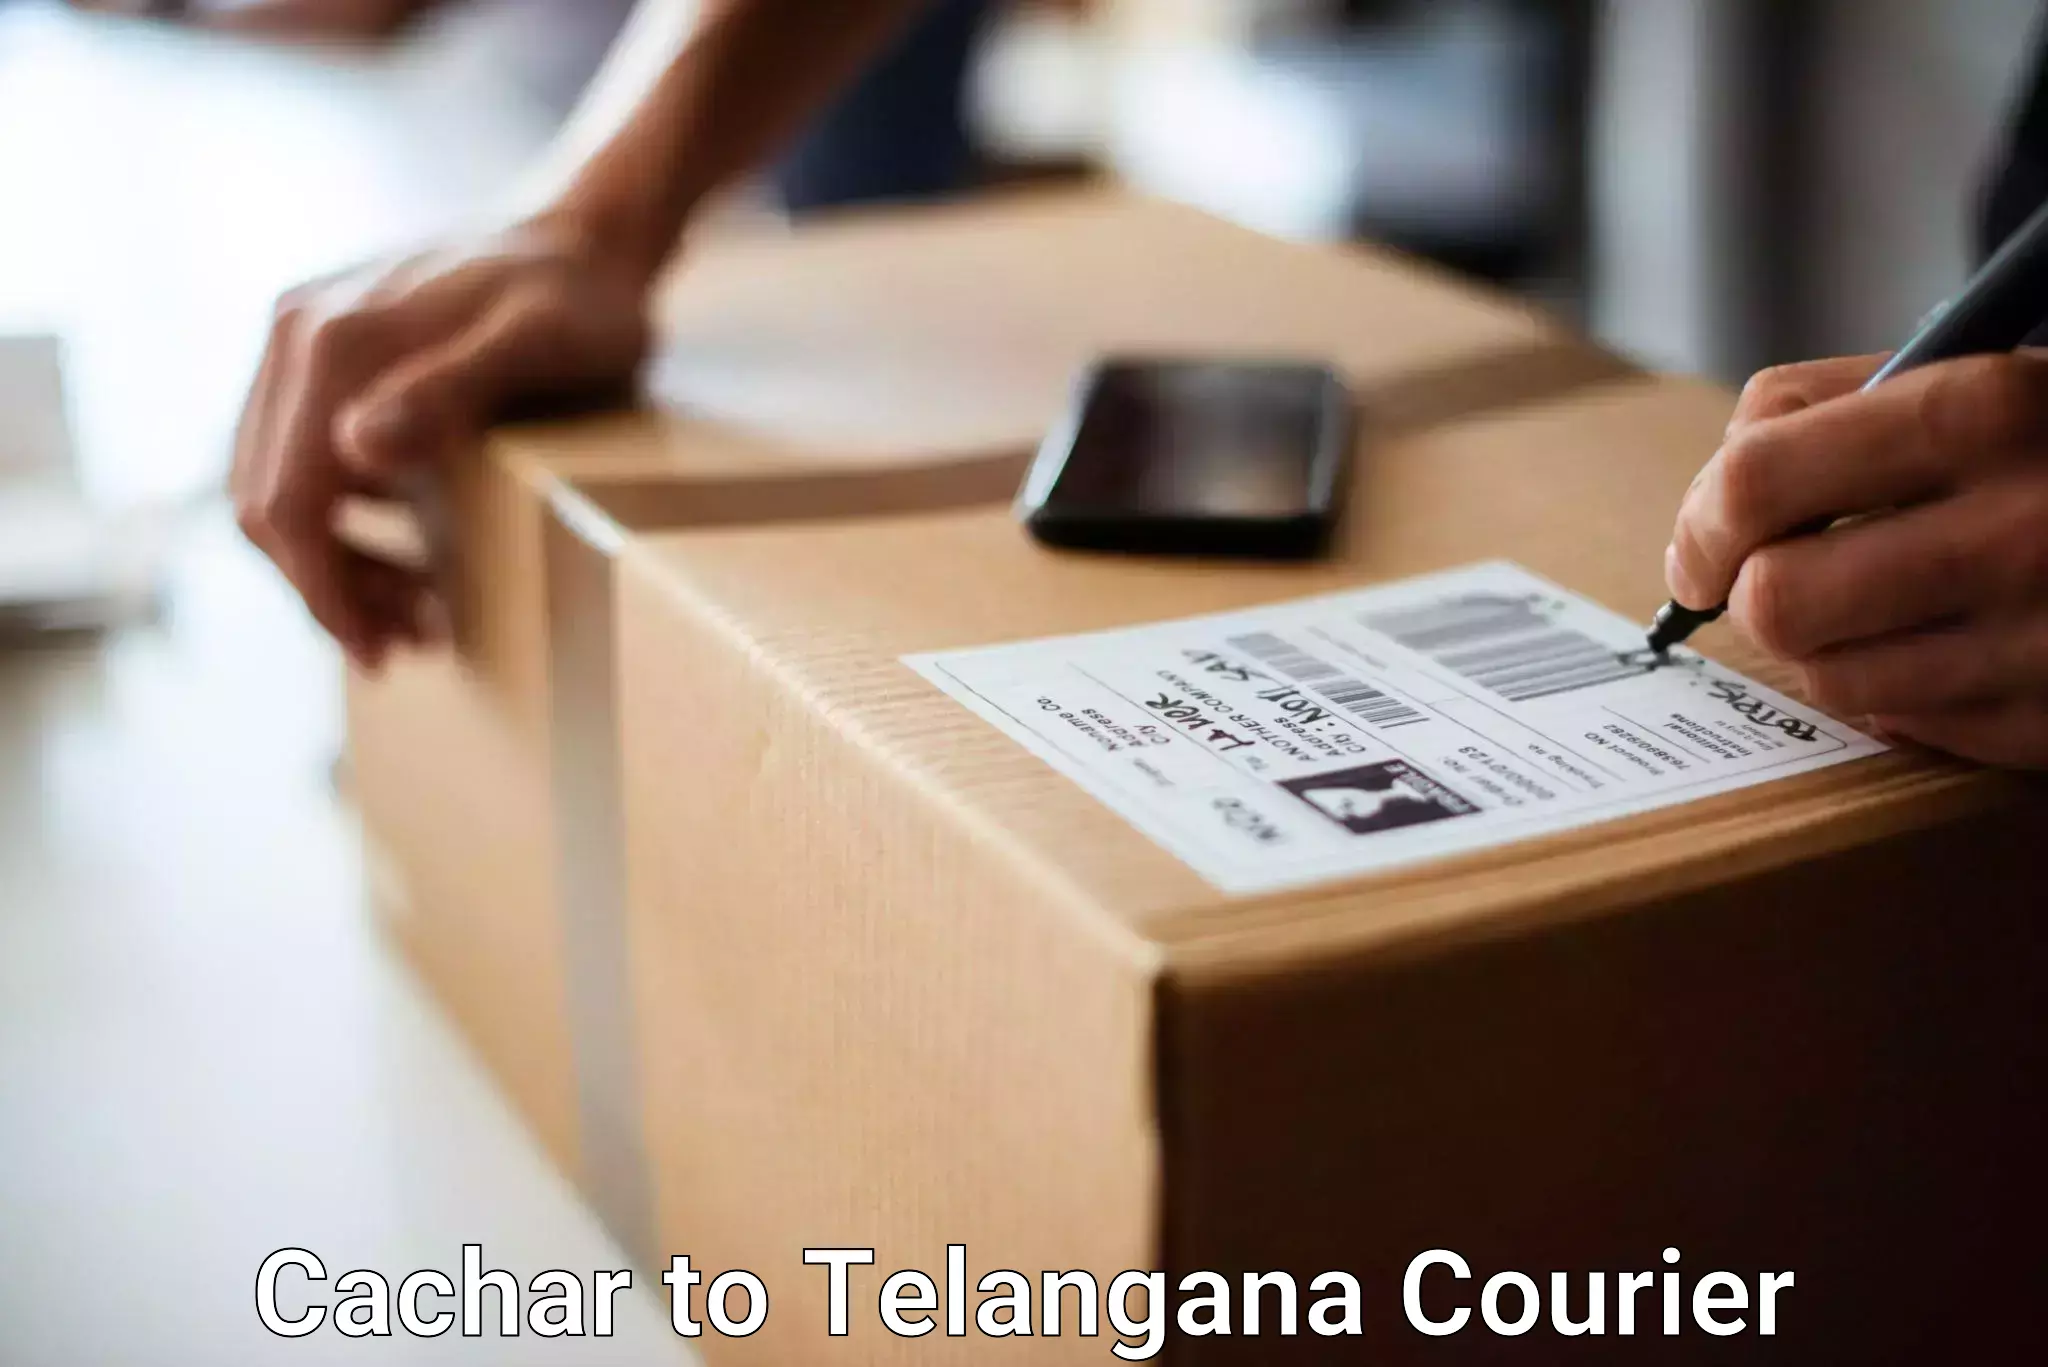 Luggage delivery app in Cachar to Veenavanka